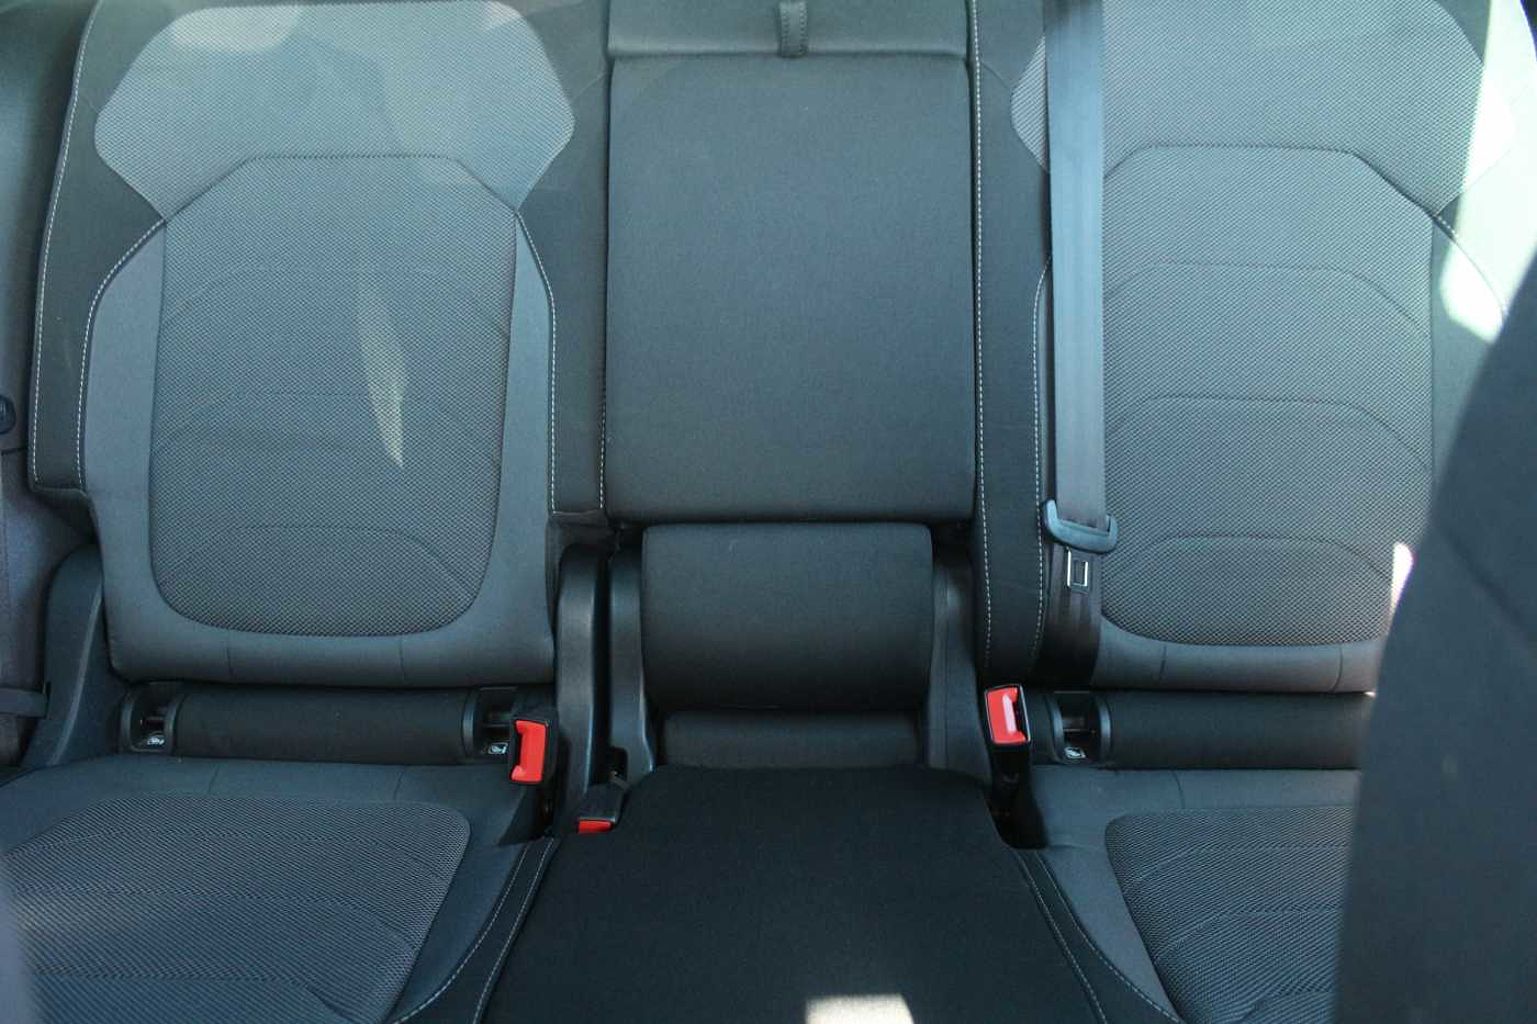 SKODA Kodiaq 1.5 TSI (150ps) SE (5 seats) DSG SUV